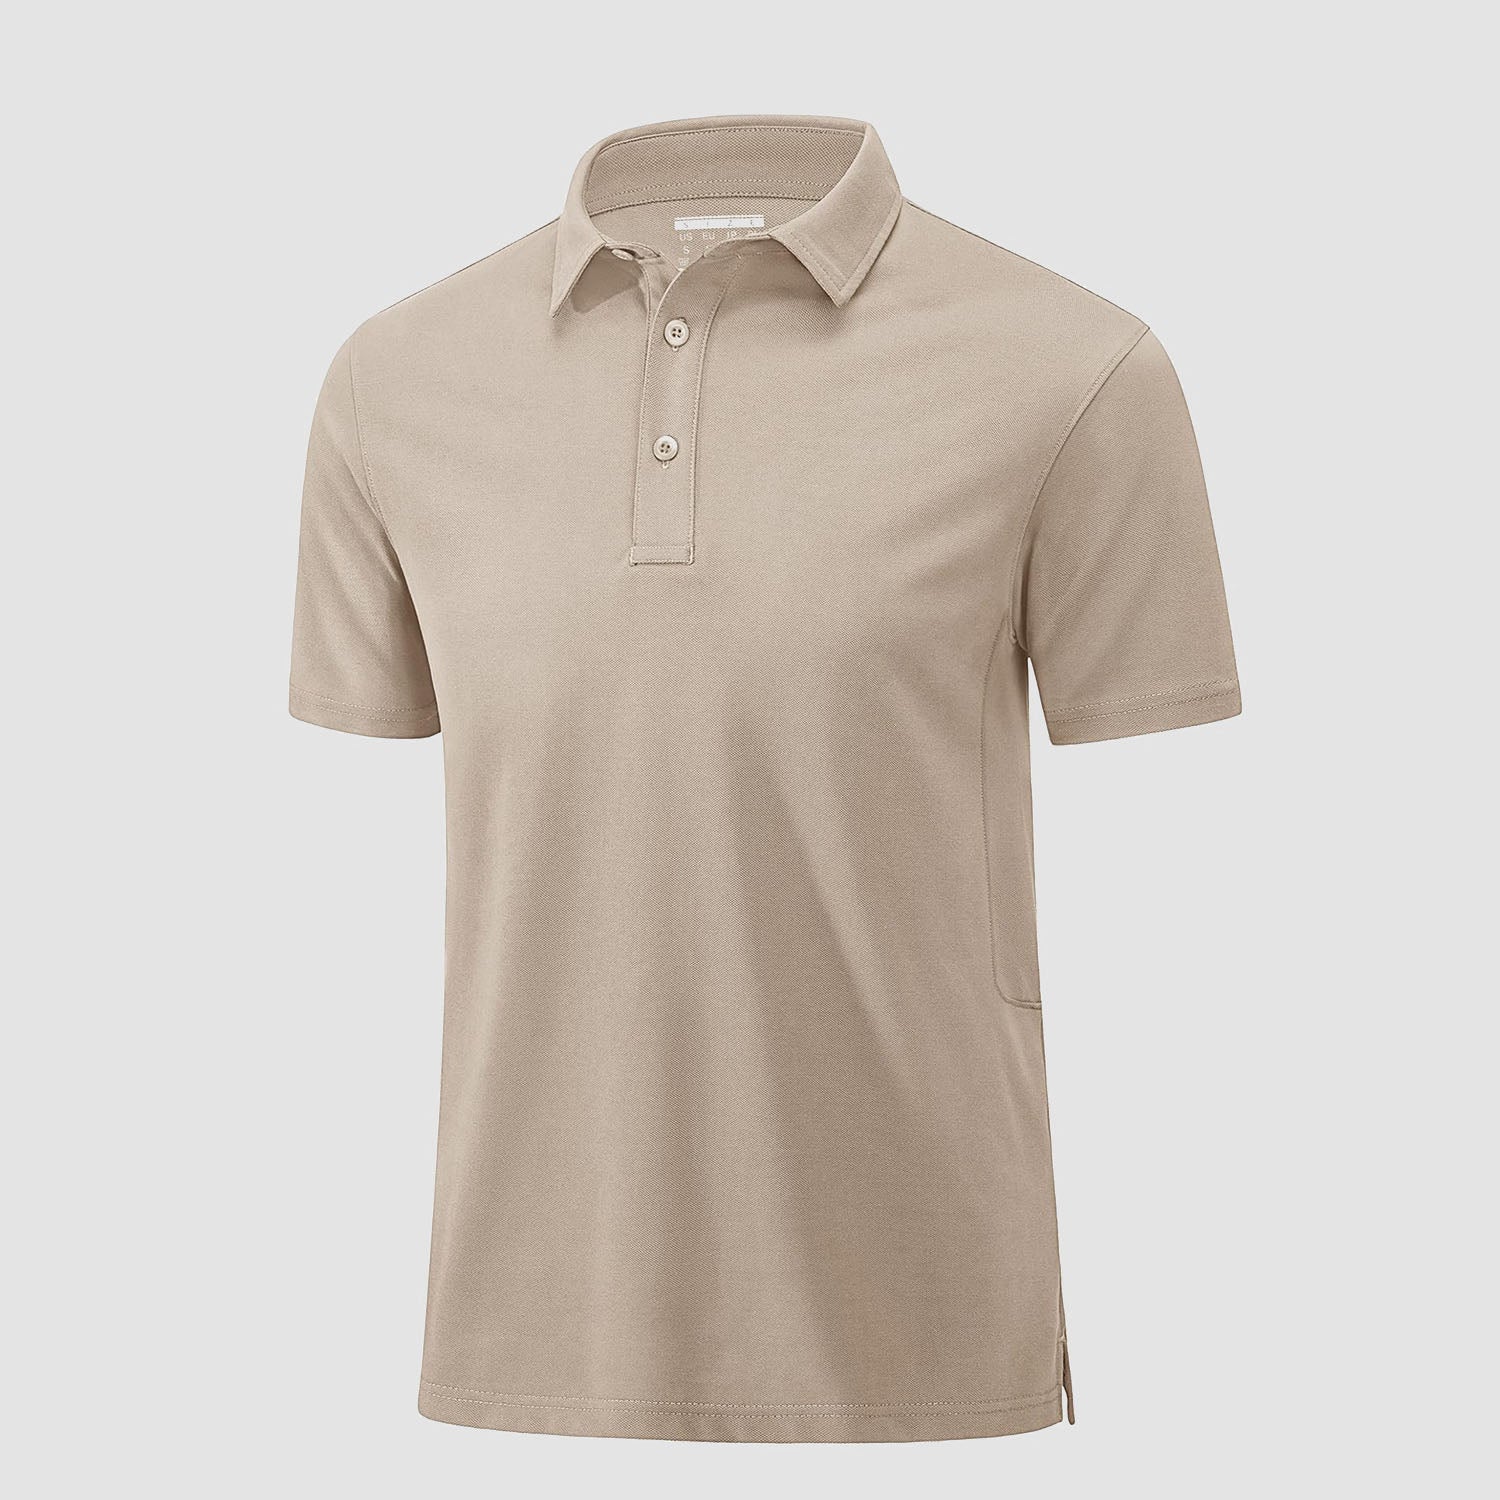 【Buy 4 Get 4th Free】Men's Short Sleeve Golf Polo Shirt